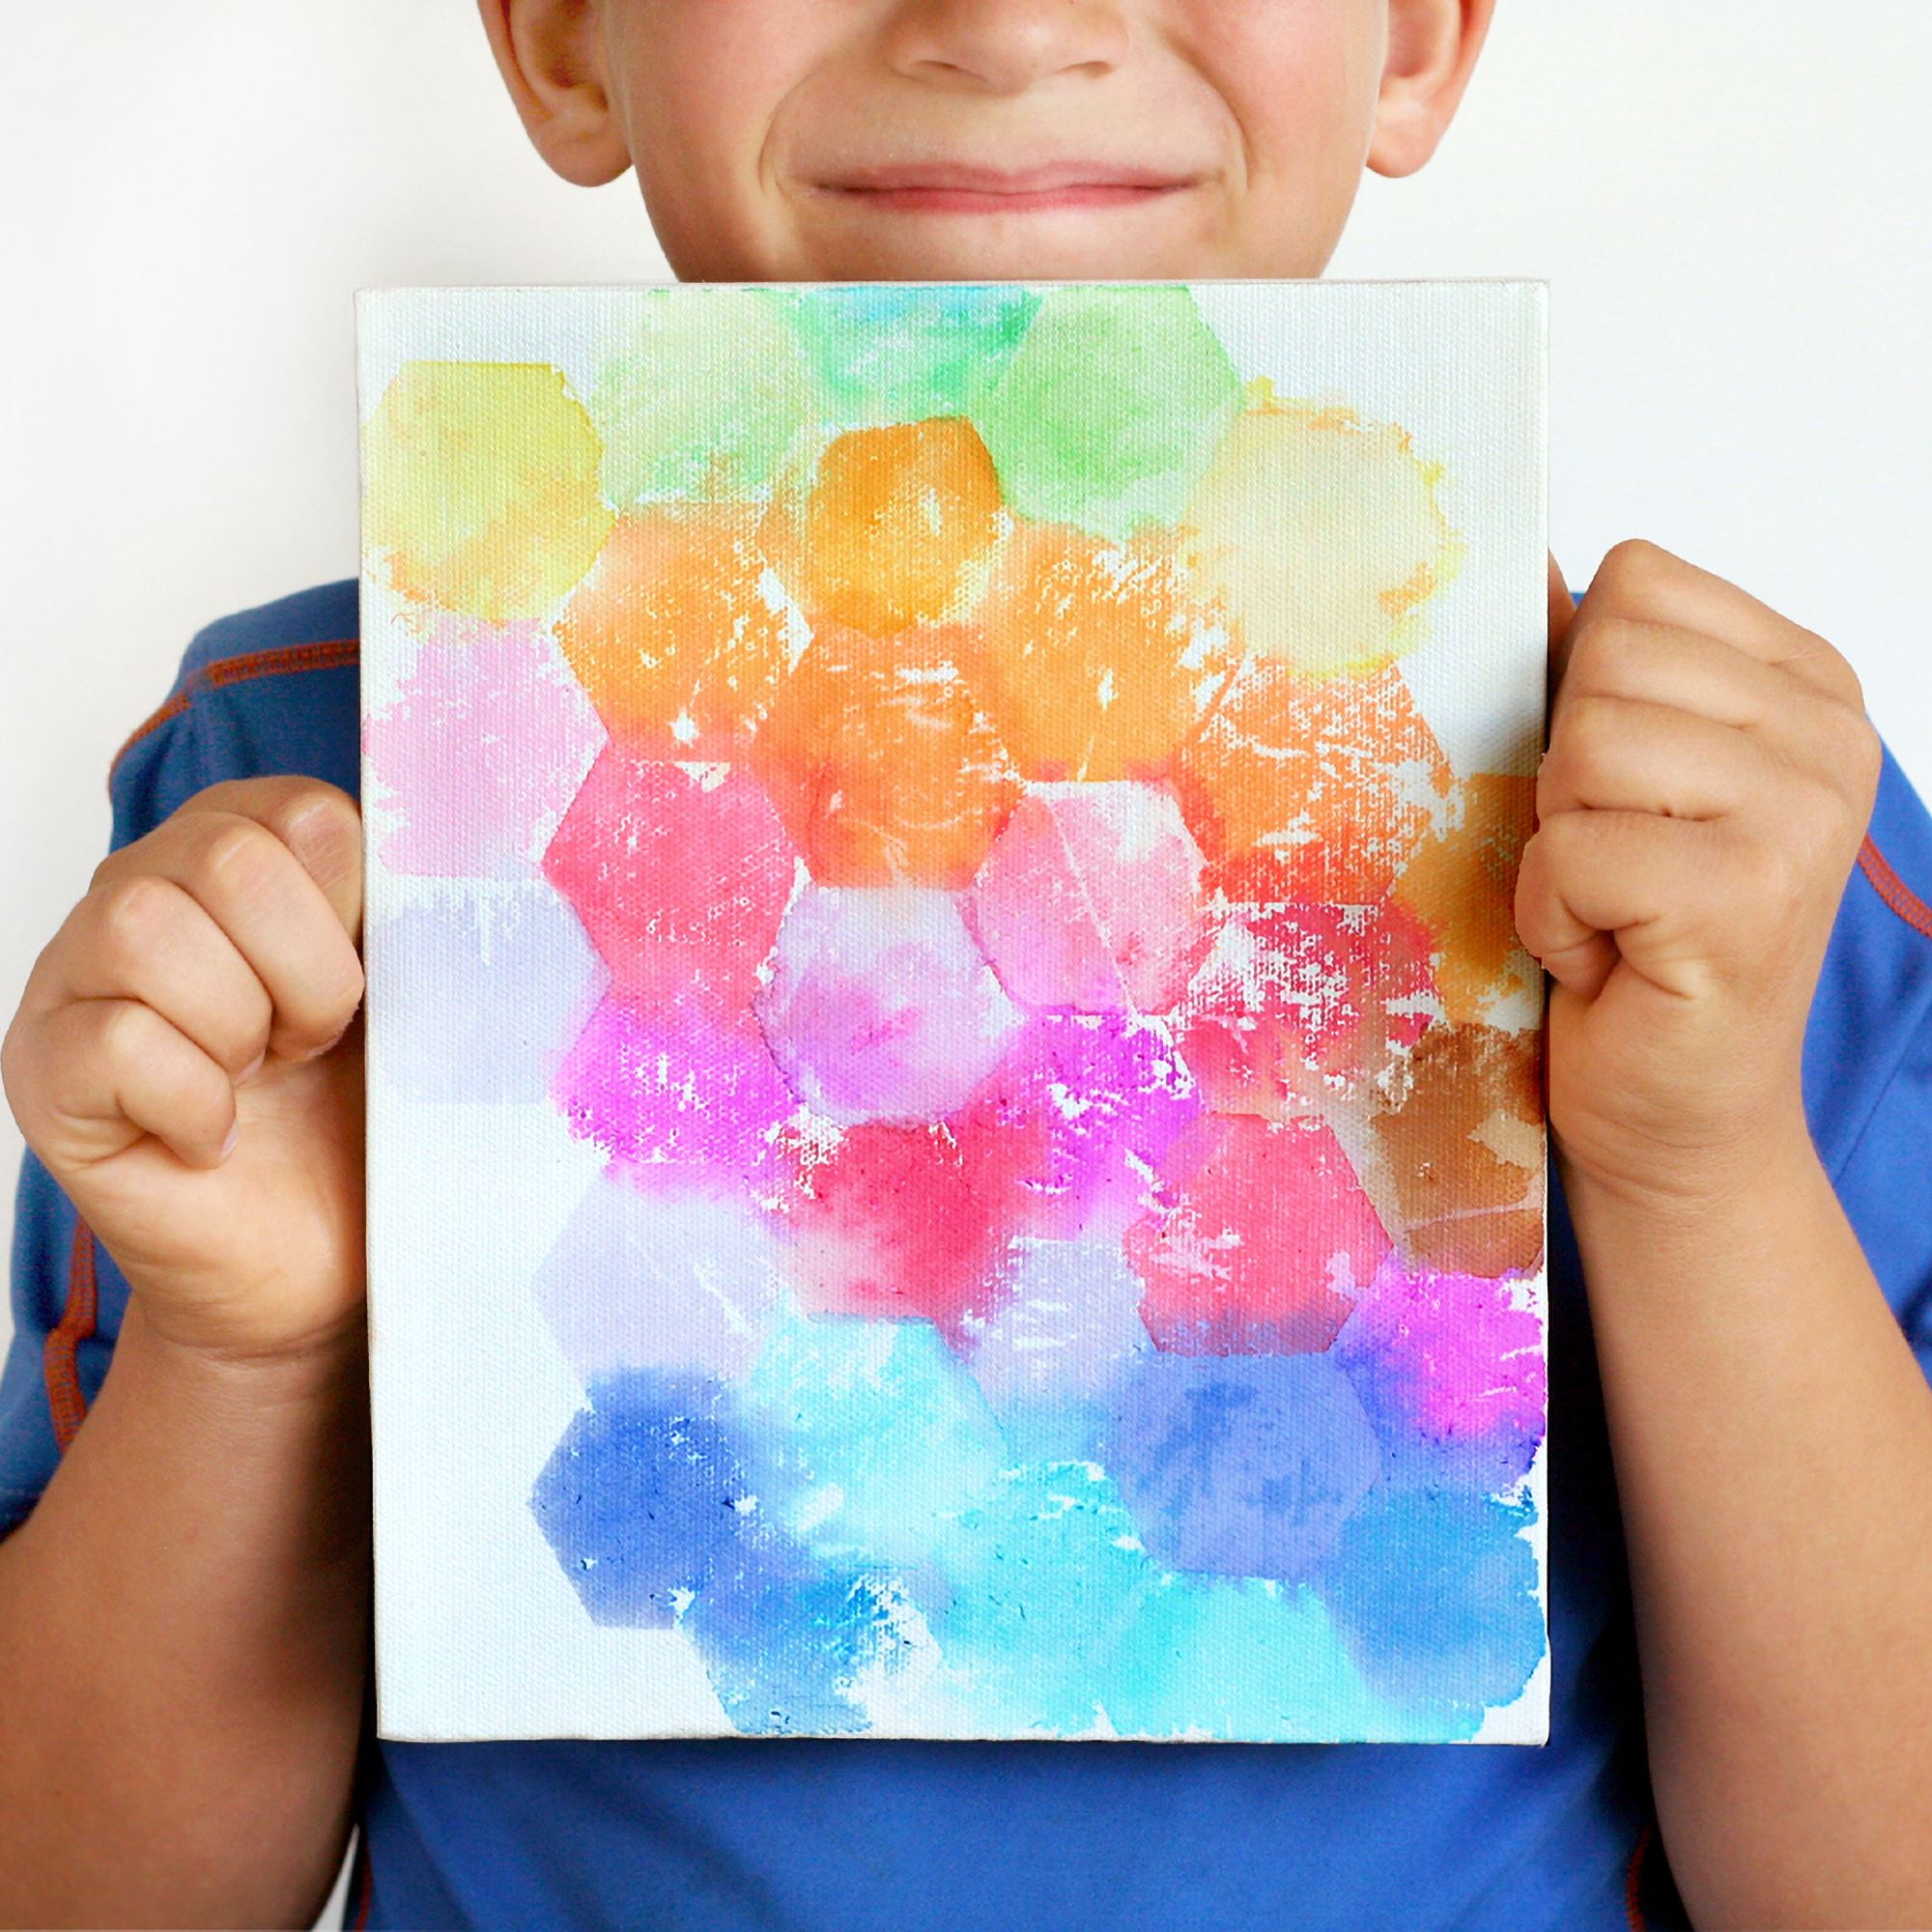 Kids Craft: Tissue Painted Canvas